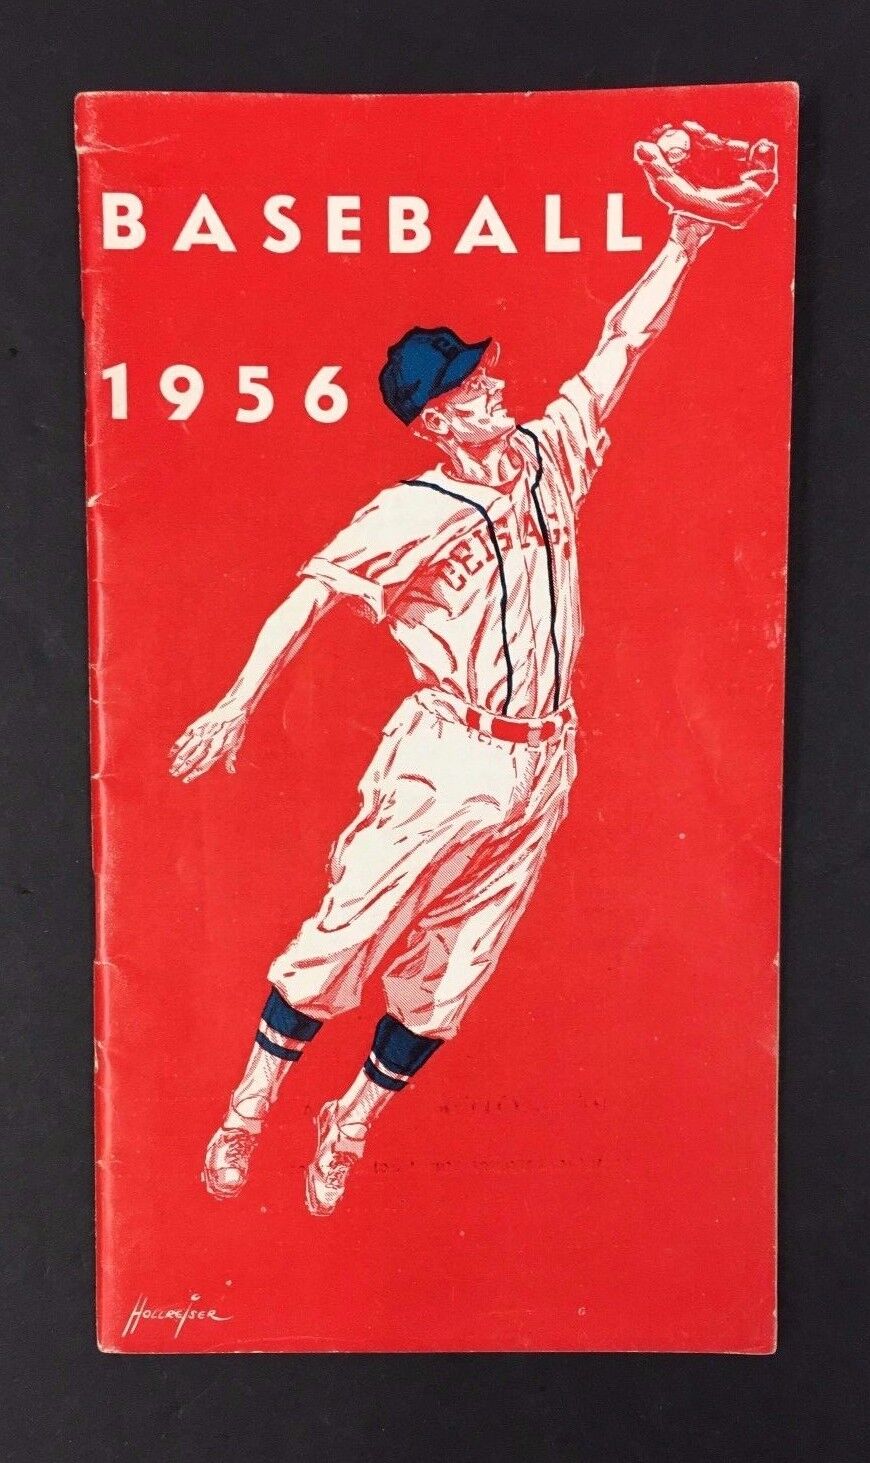 1956 Professional Baseball Guide Schedule Awards Statistics Book Vintage Sports